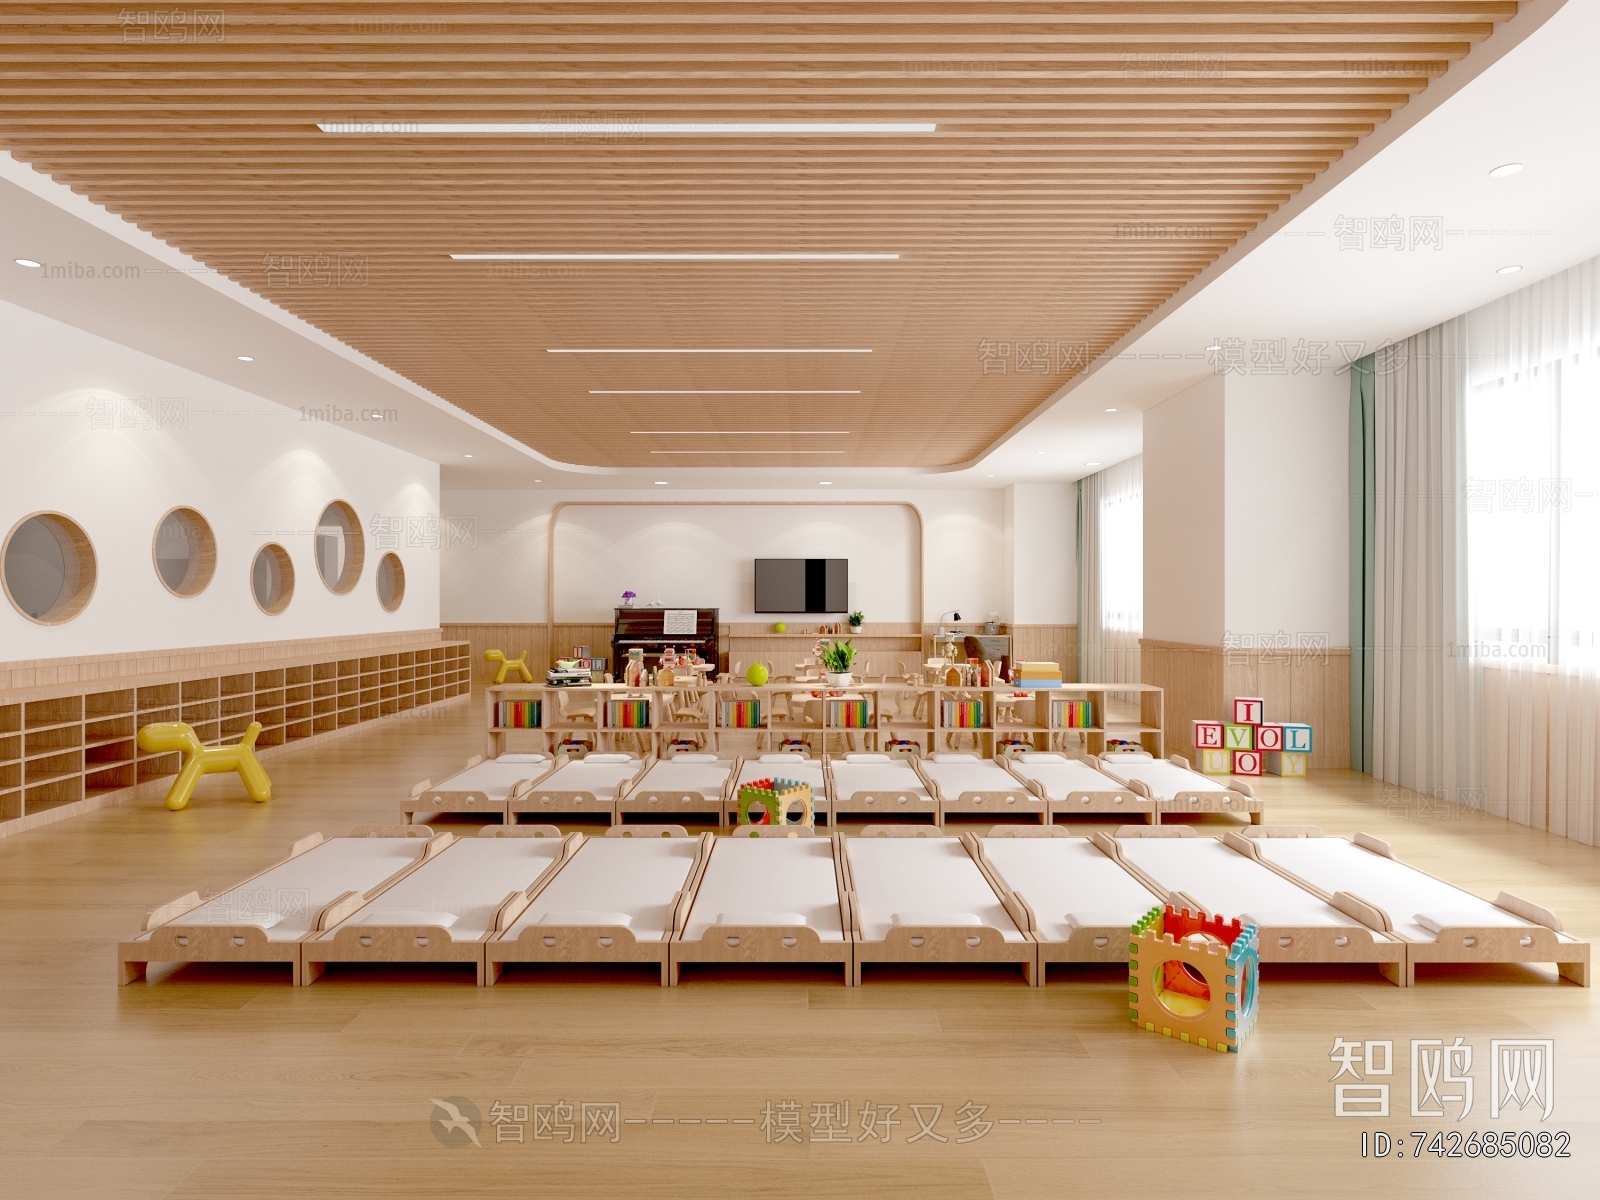 Modern Kindergarten Dormitory